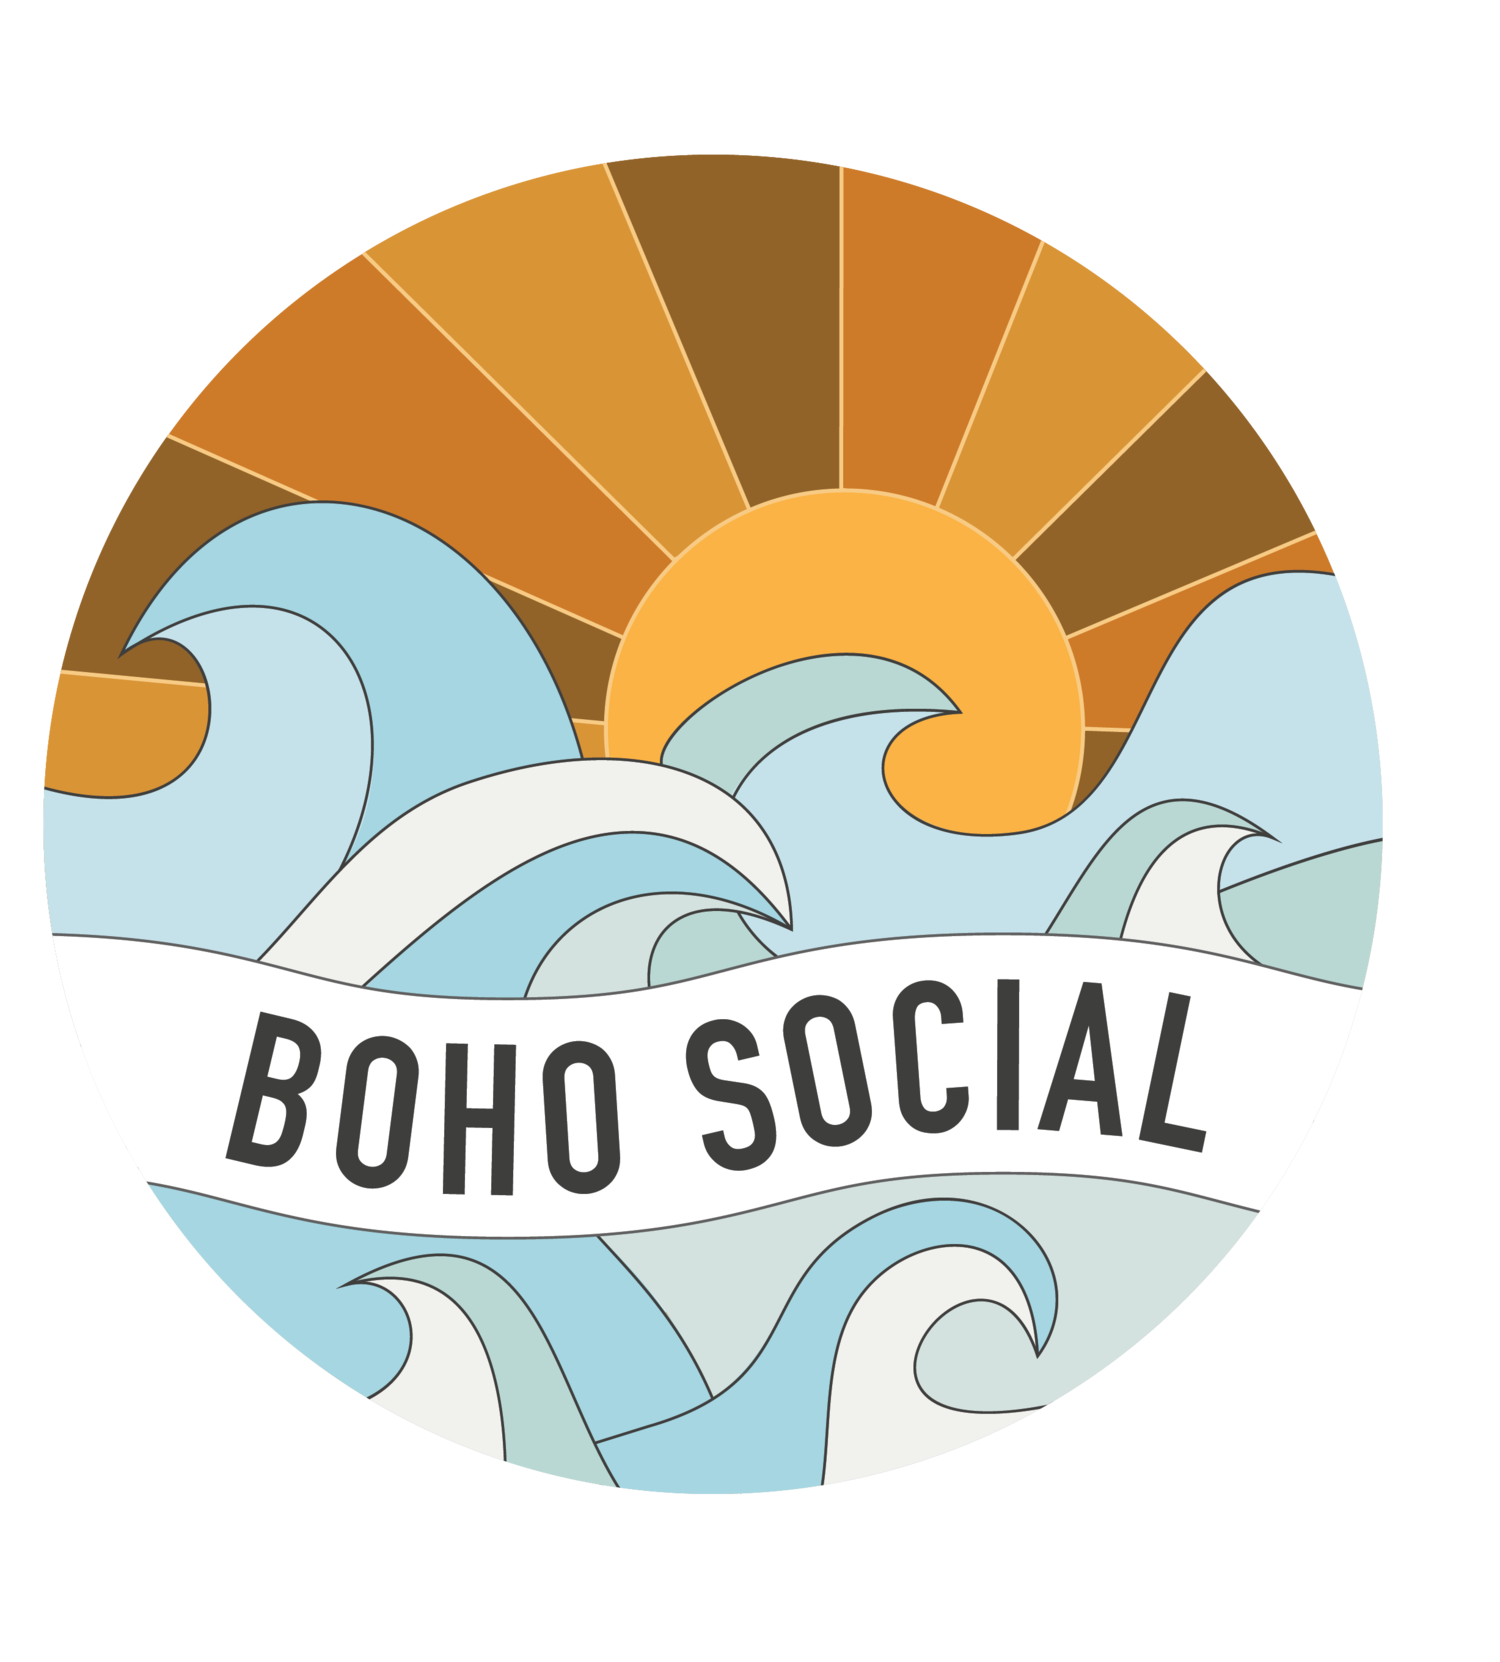 Boho Social | Social media help for small businesses